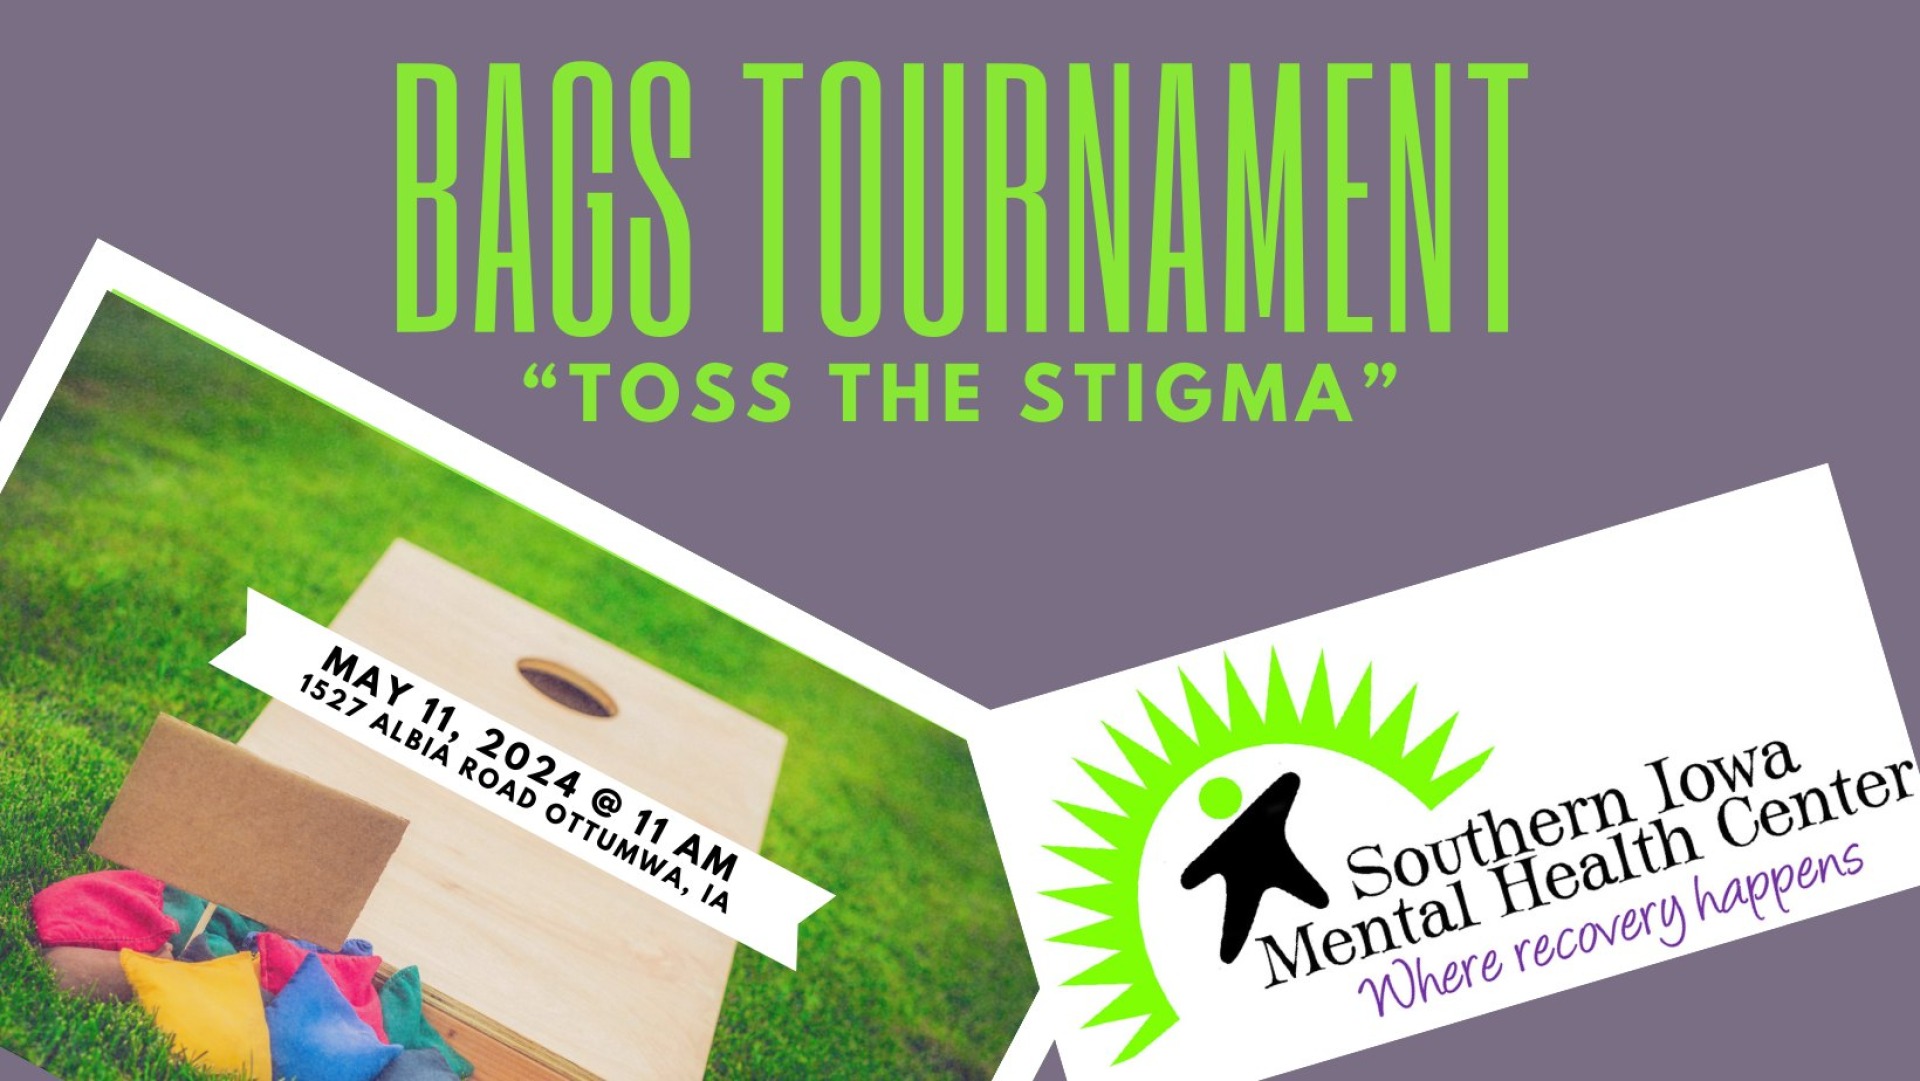 Toss the Stigma Bags Tournament